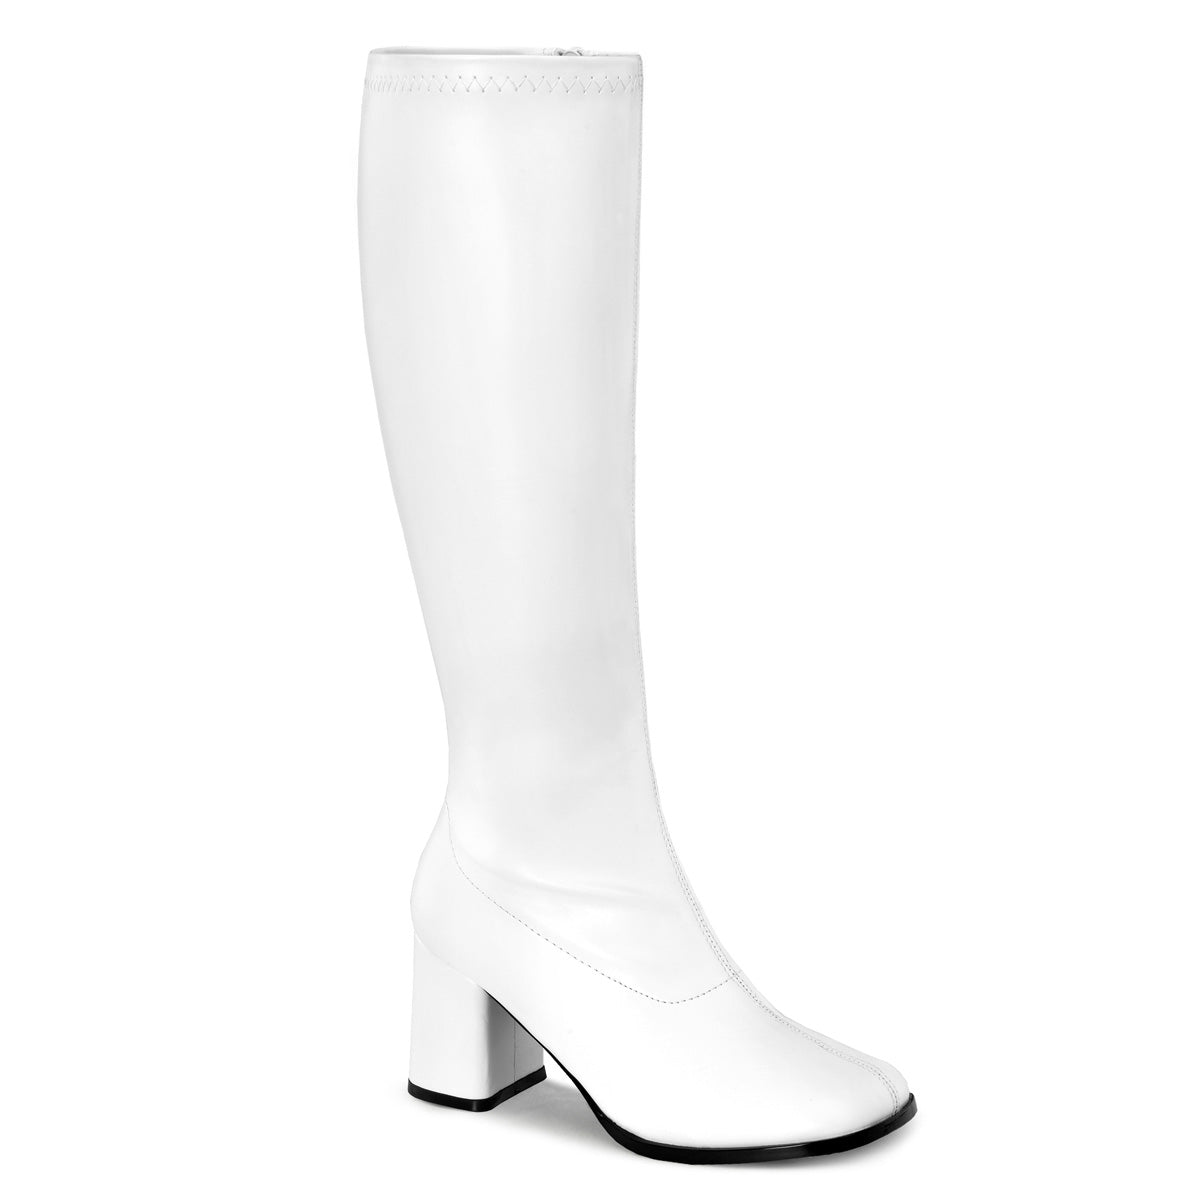 GOGO-300WC 3" Heel White Wide Width Knee High Boots Funtasma Costume Shoes